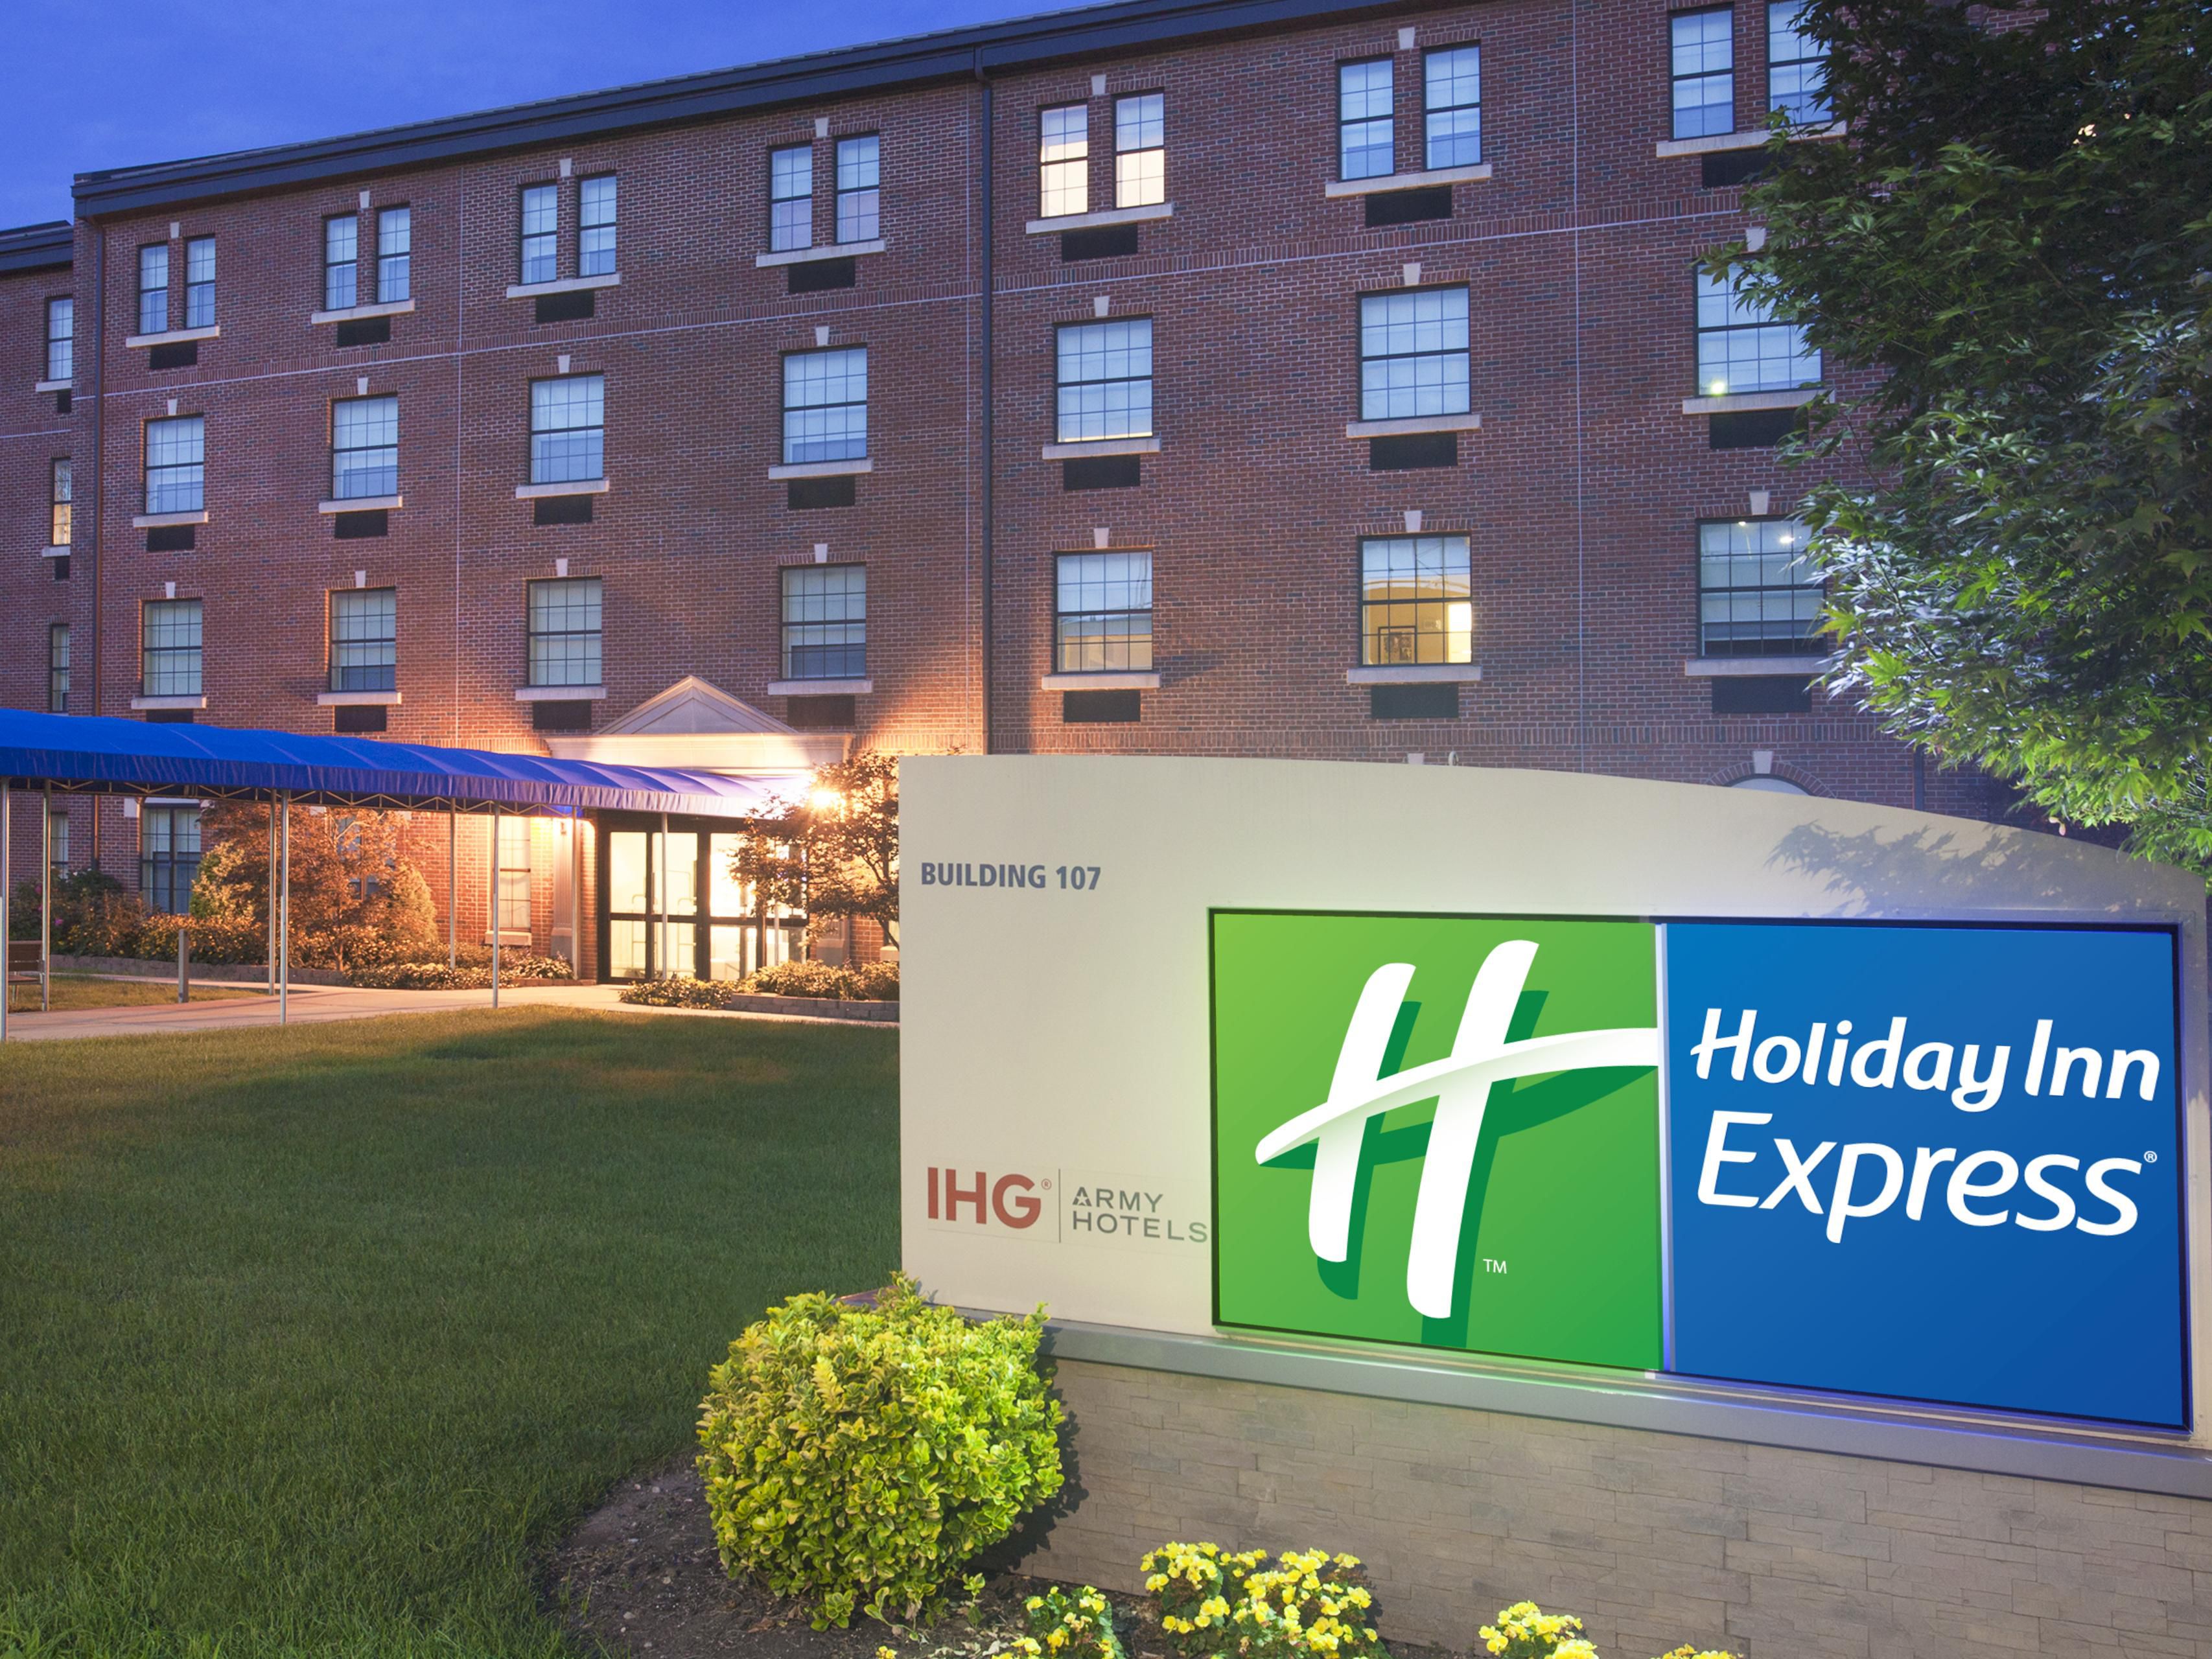 Holiday Inn Express Building 107 Hotel by IHG